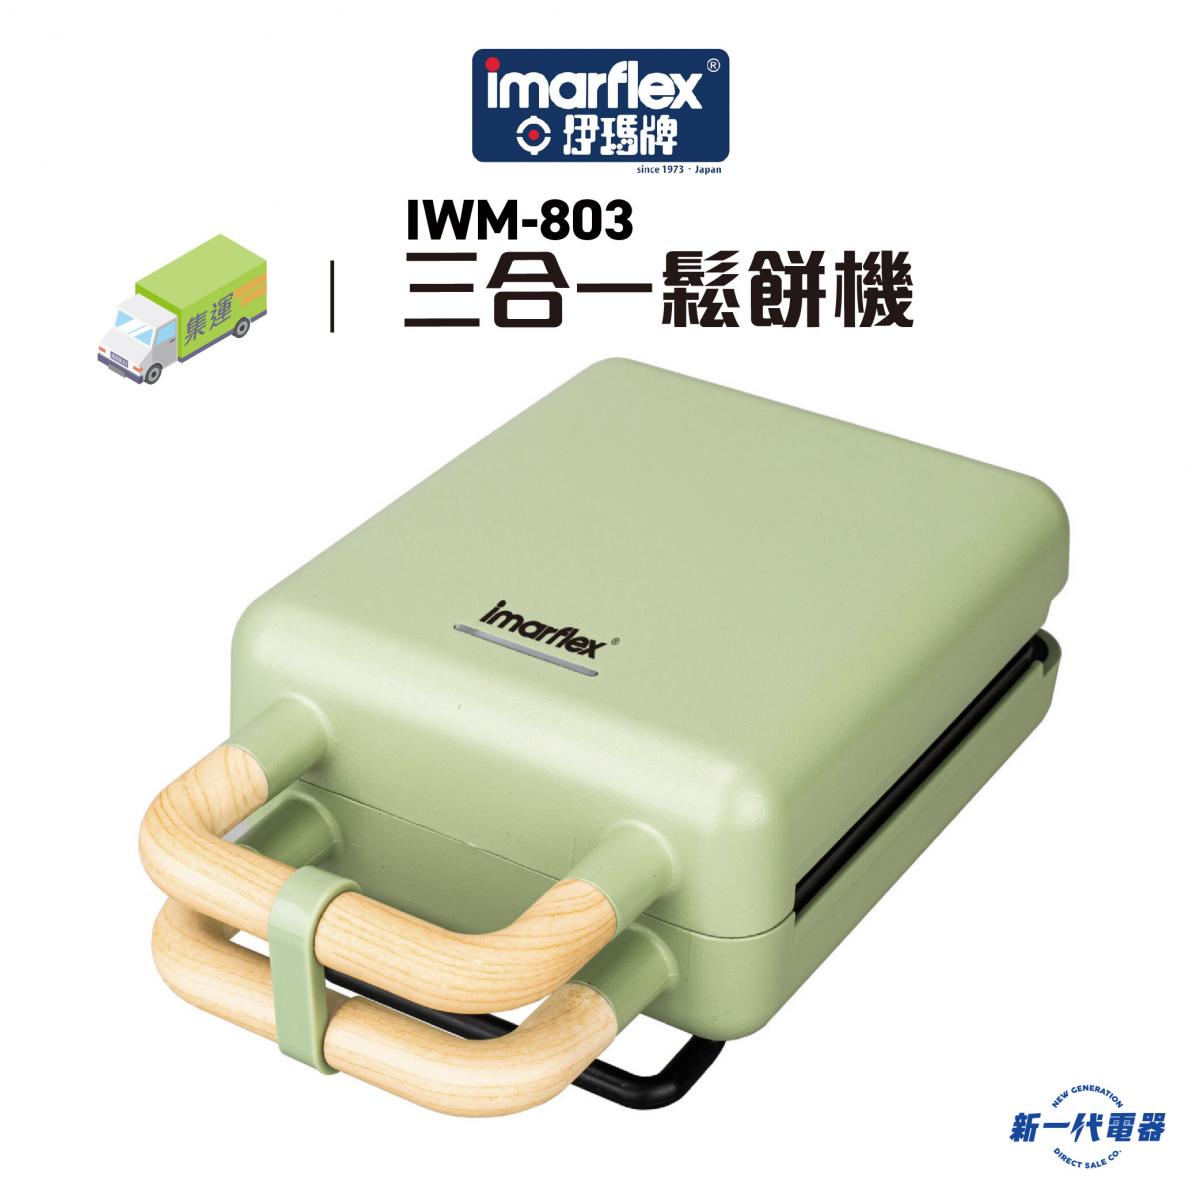 IWM803   Imarflex『樂翠』三合一鬆餅機  (IWM-803)